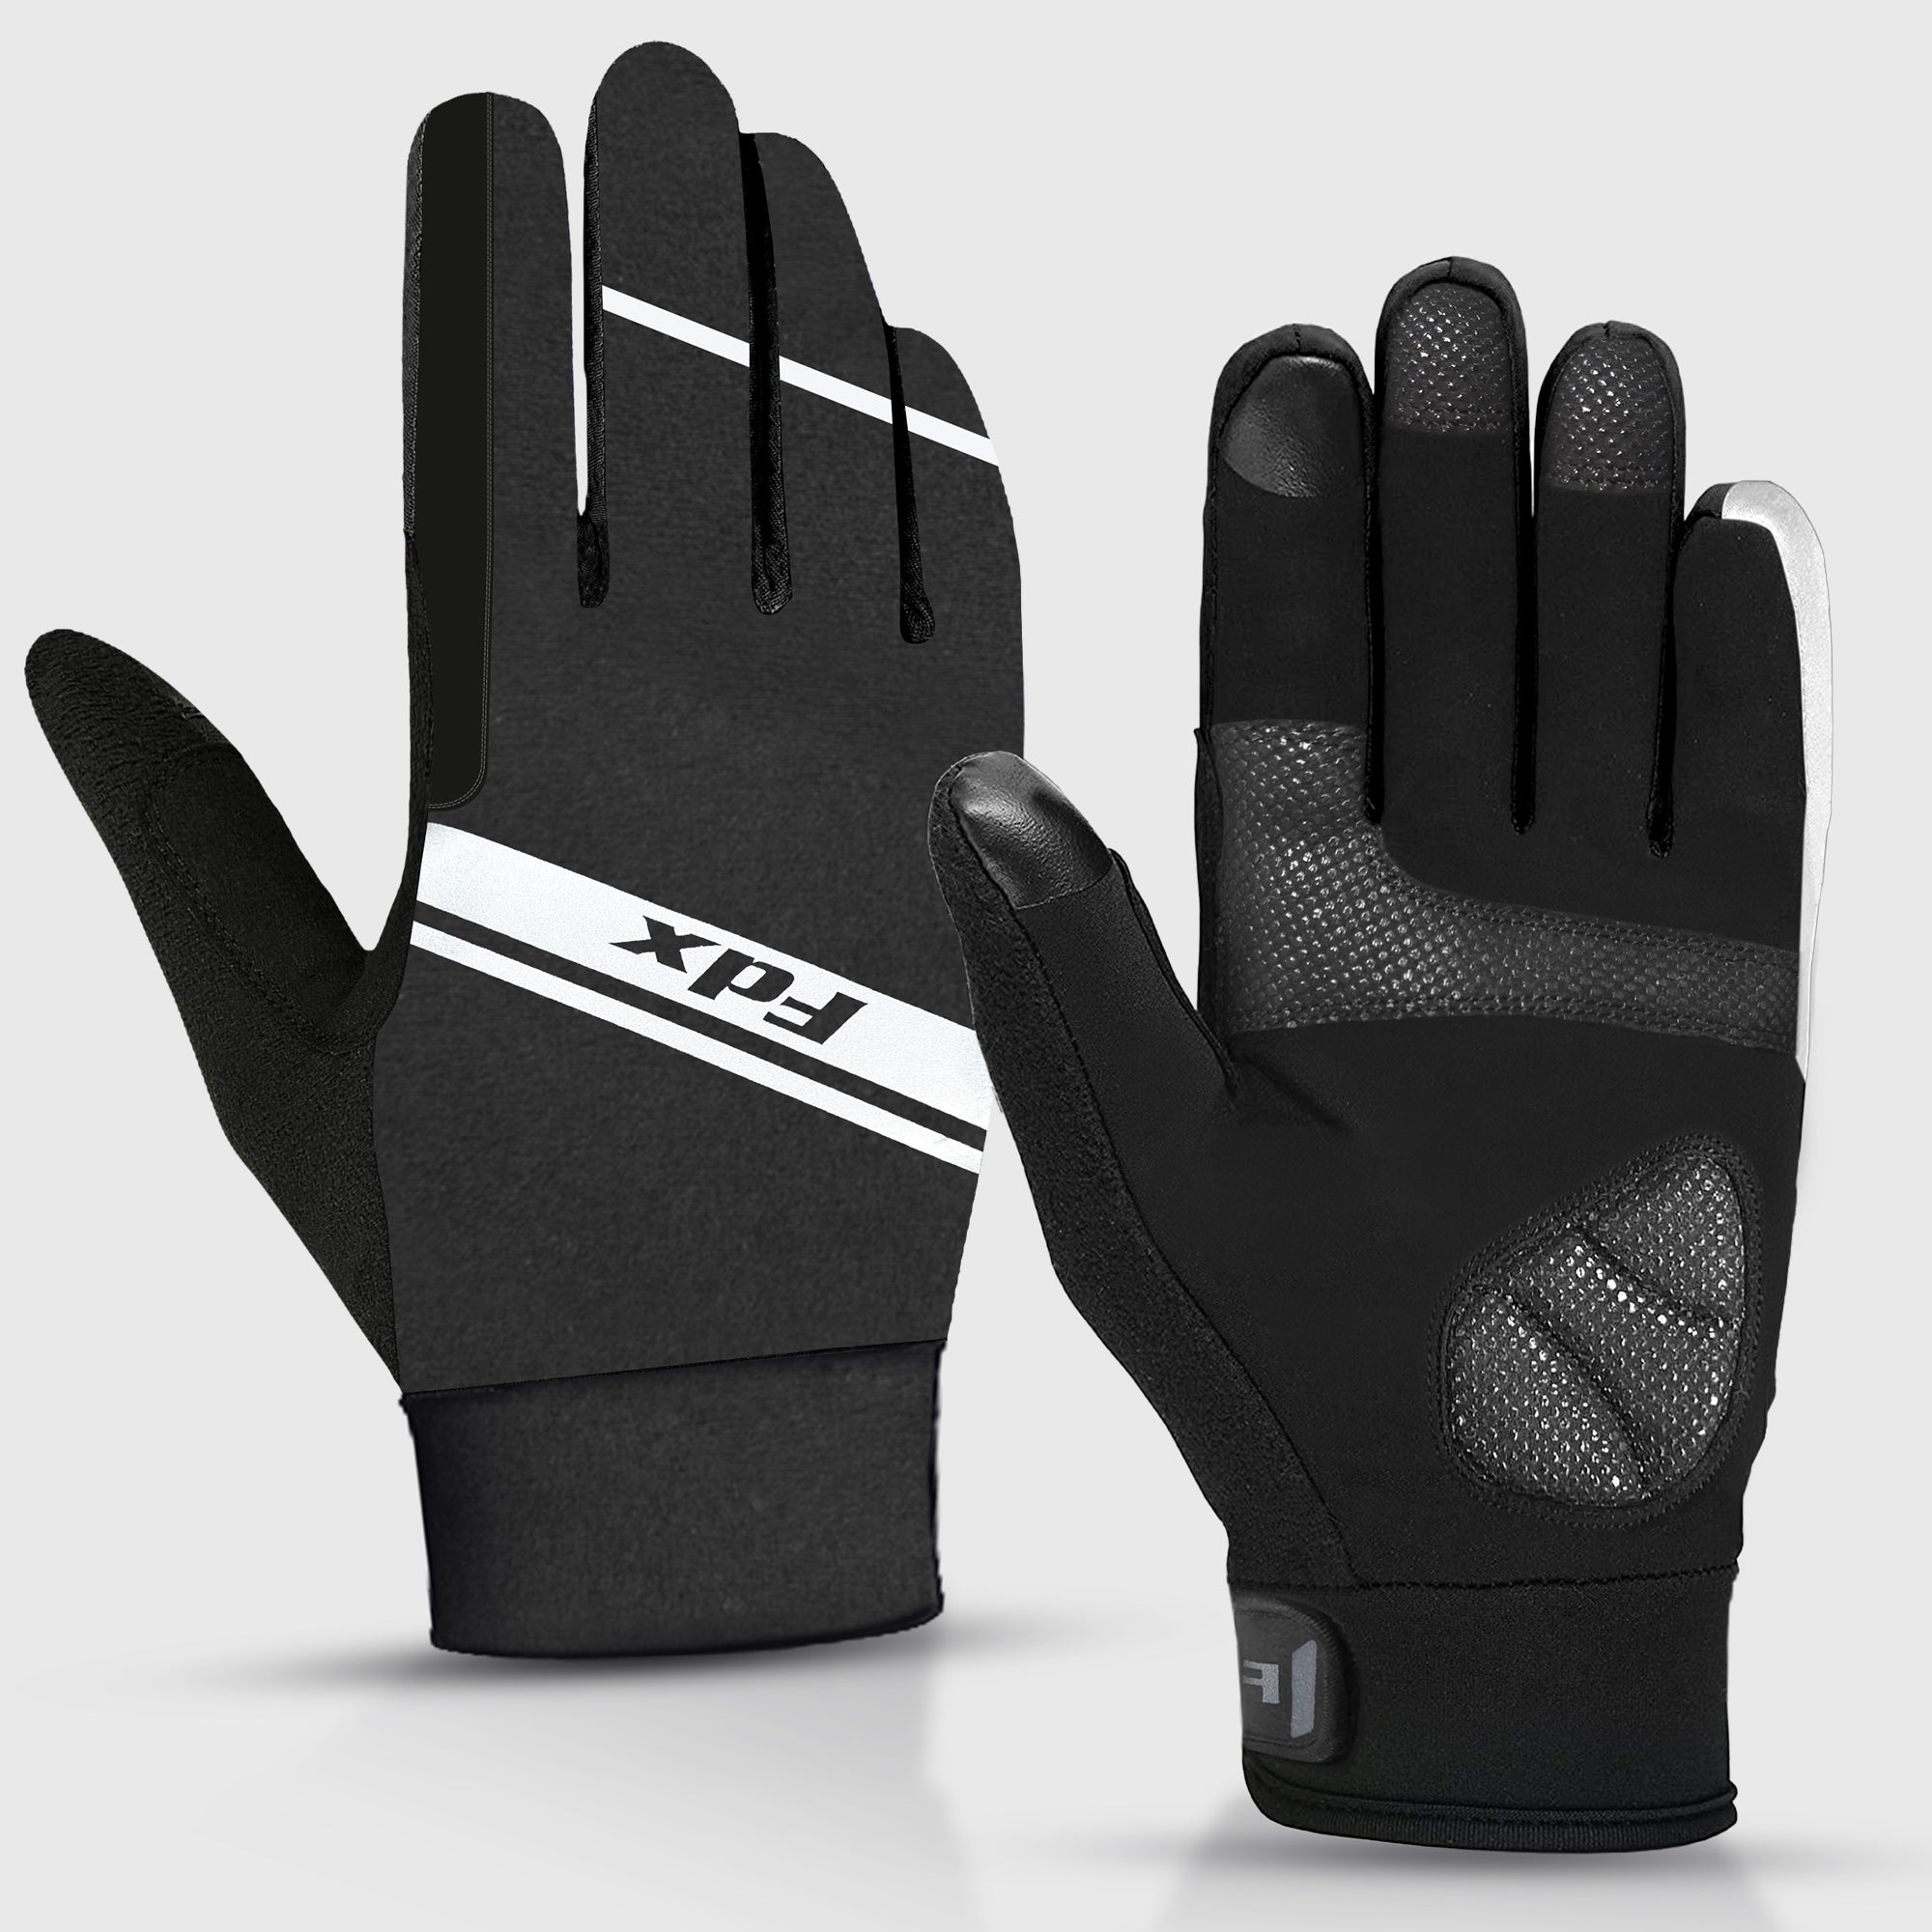 FDX Aqua Full Finger Waterproof Winter Cycling Gloves Gel padded, Silicon Gripper, Anti Slip, Reflective Details & Long Cuffs UK